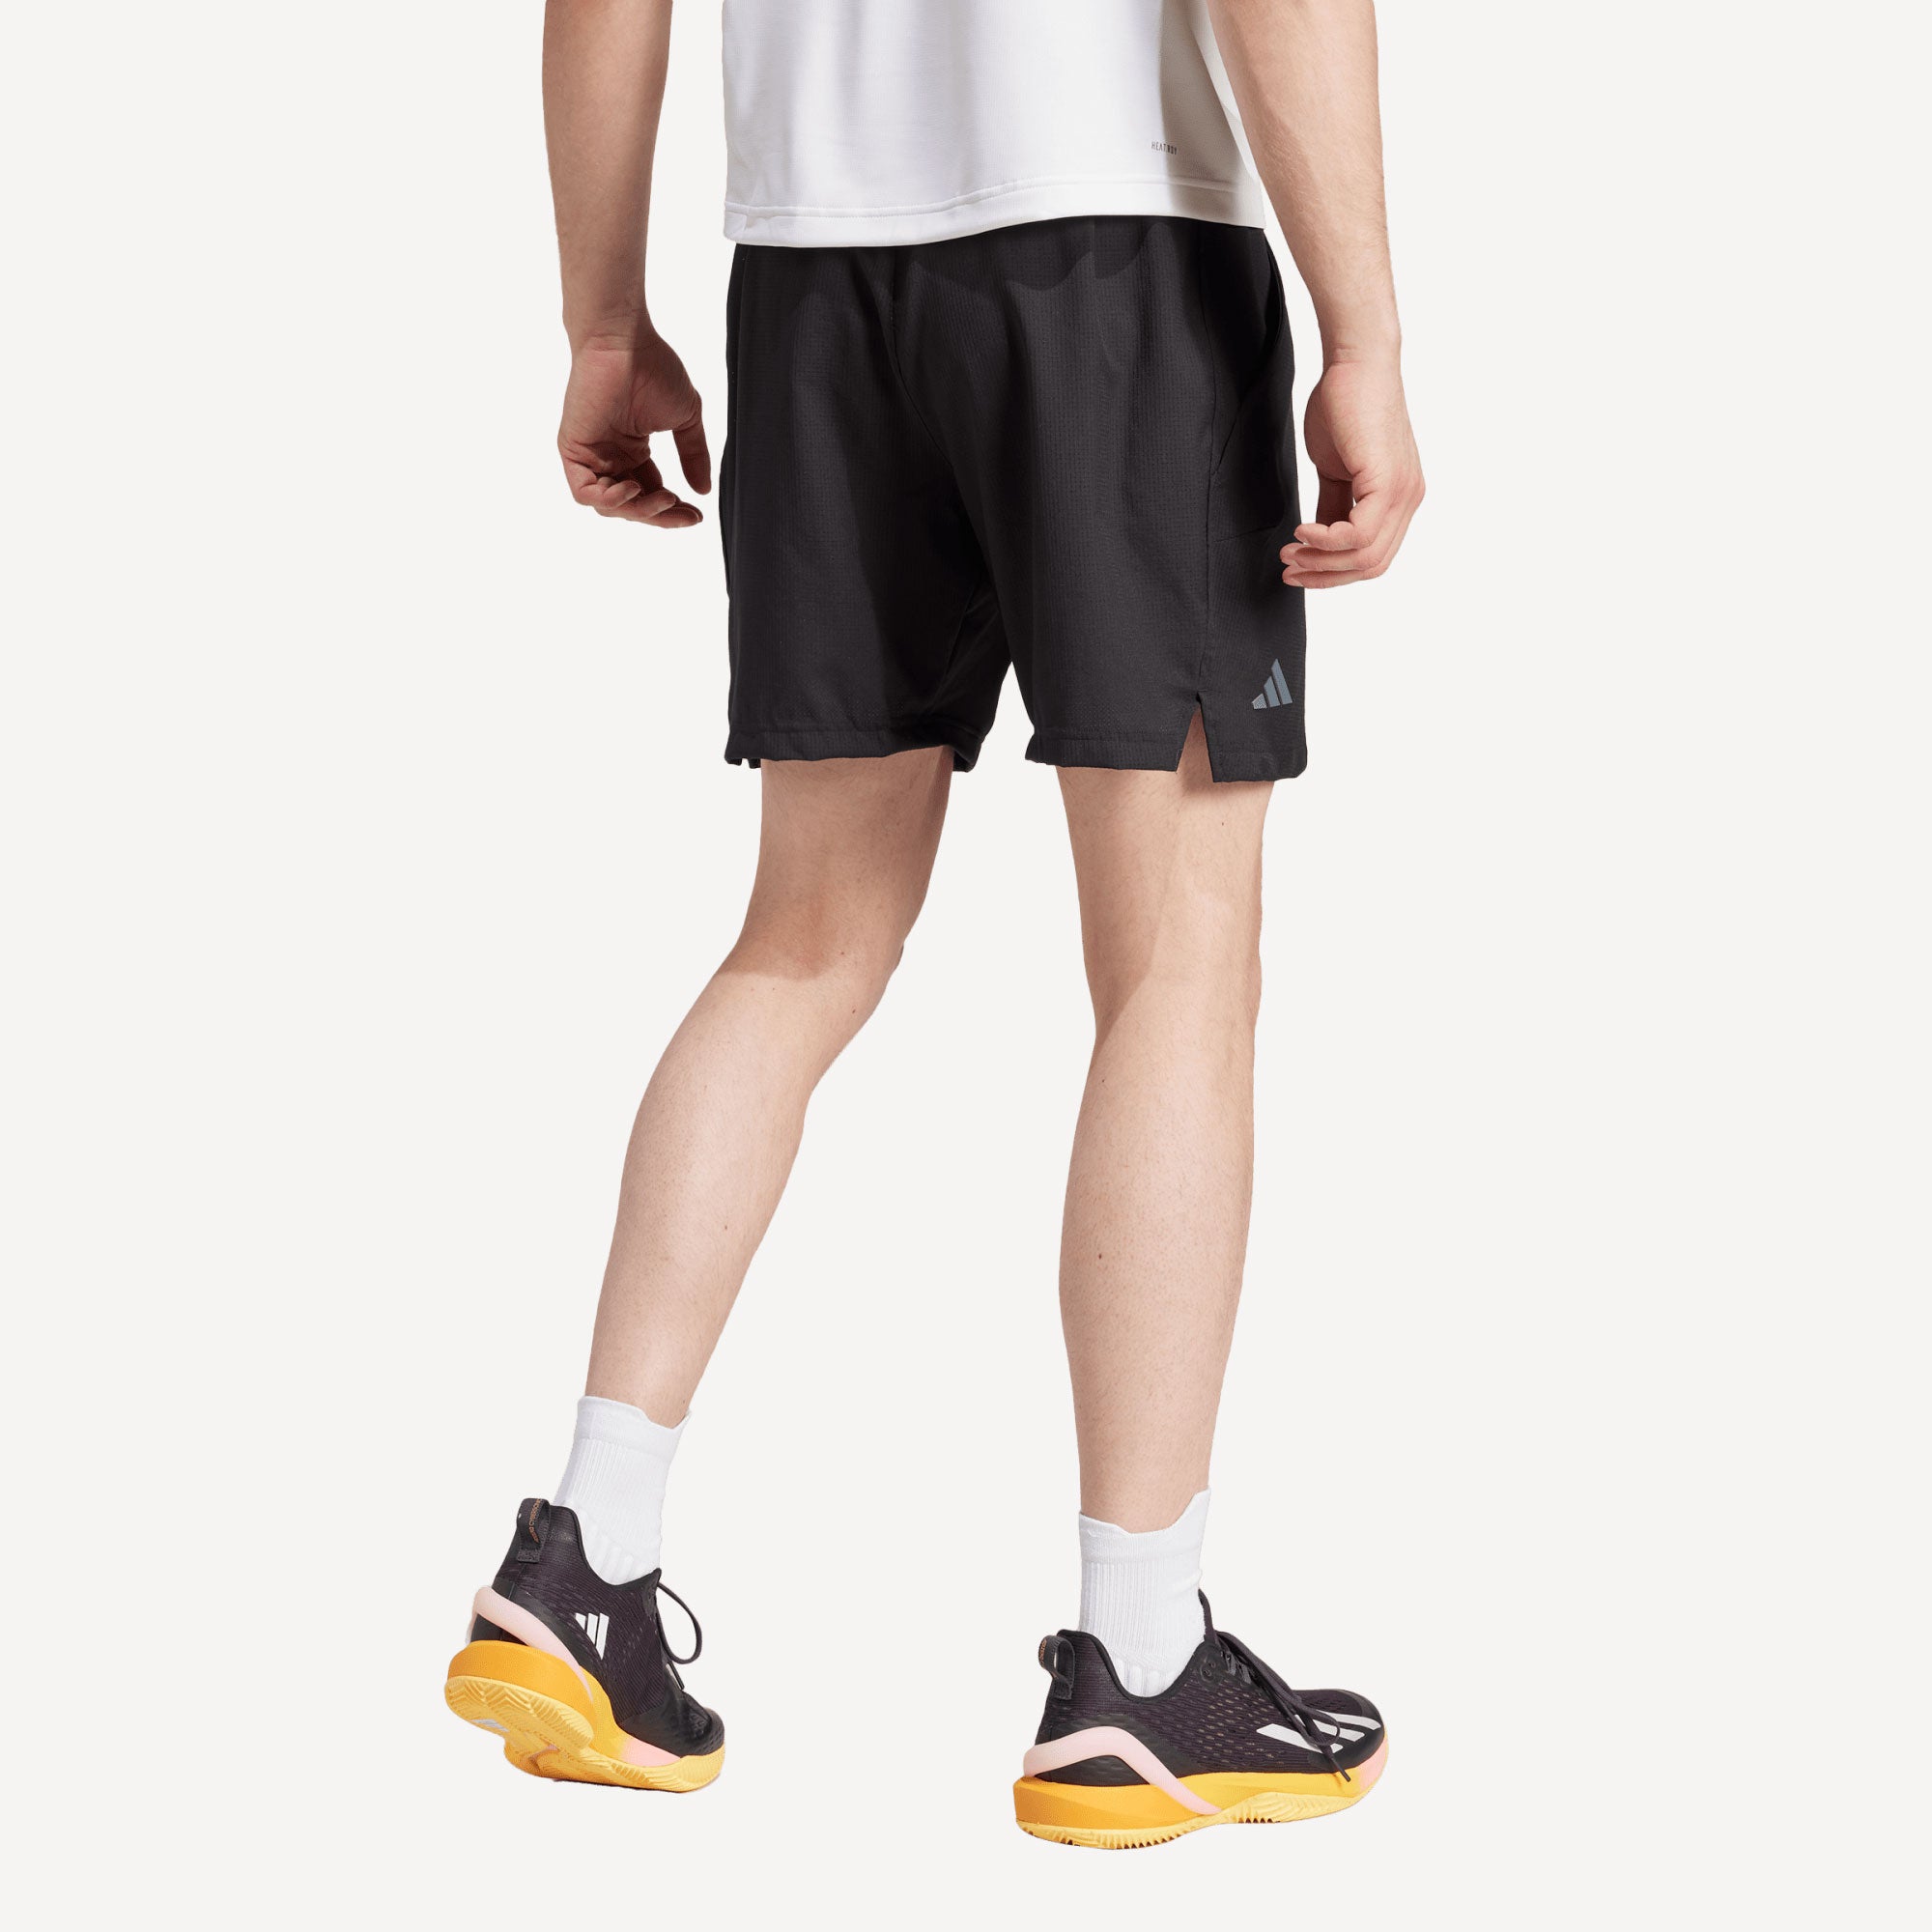 adidas Pro Paris Men's Tennis Shorts and Inner Shorts Set - Black (2)